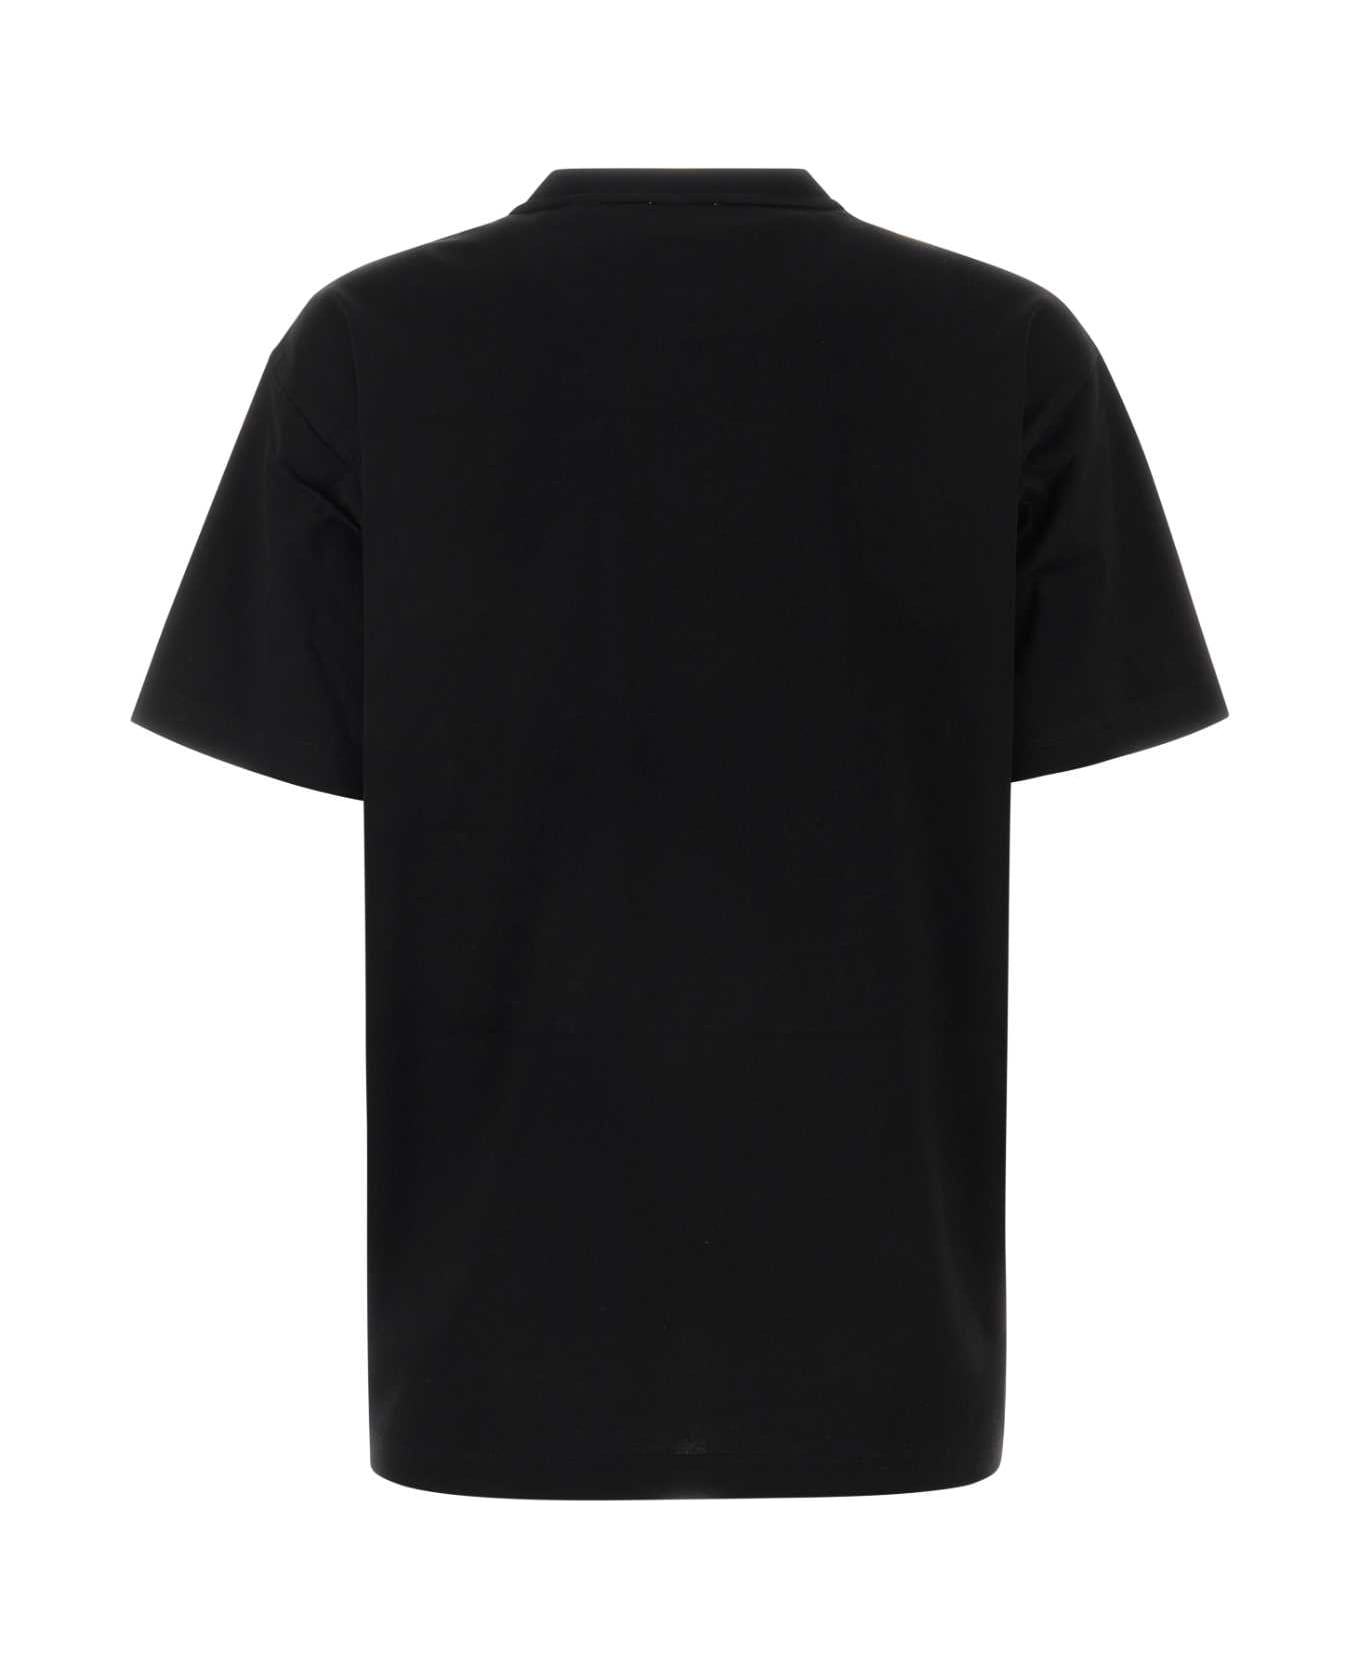 Burberry Black Cotton Oversize T-shirt - BLACK